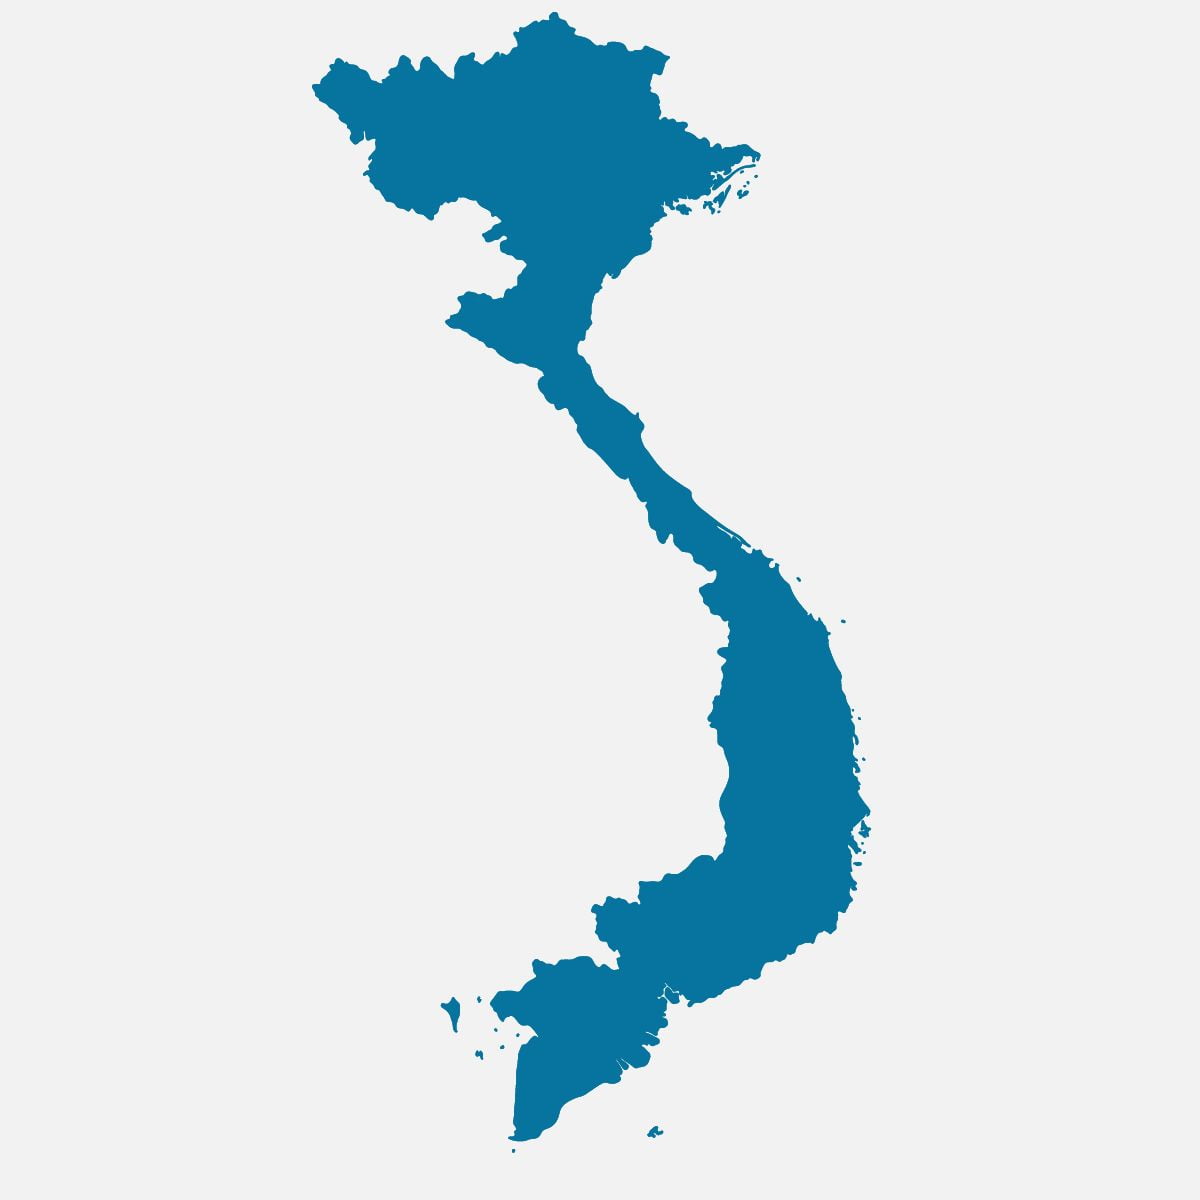 Nationalfeiertag Vietnam – was macht Vietnam aus